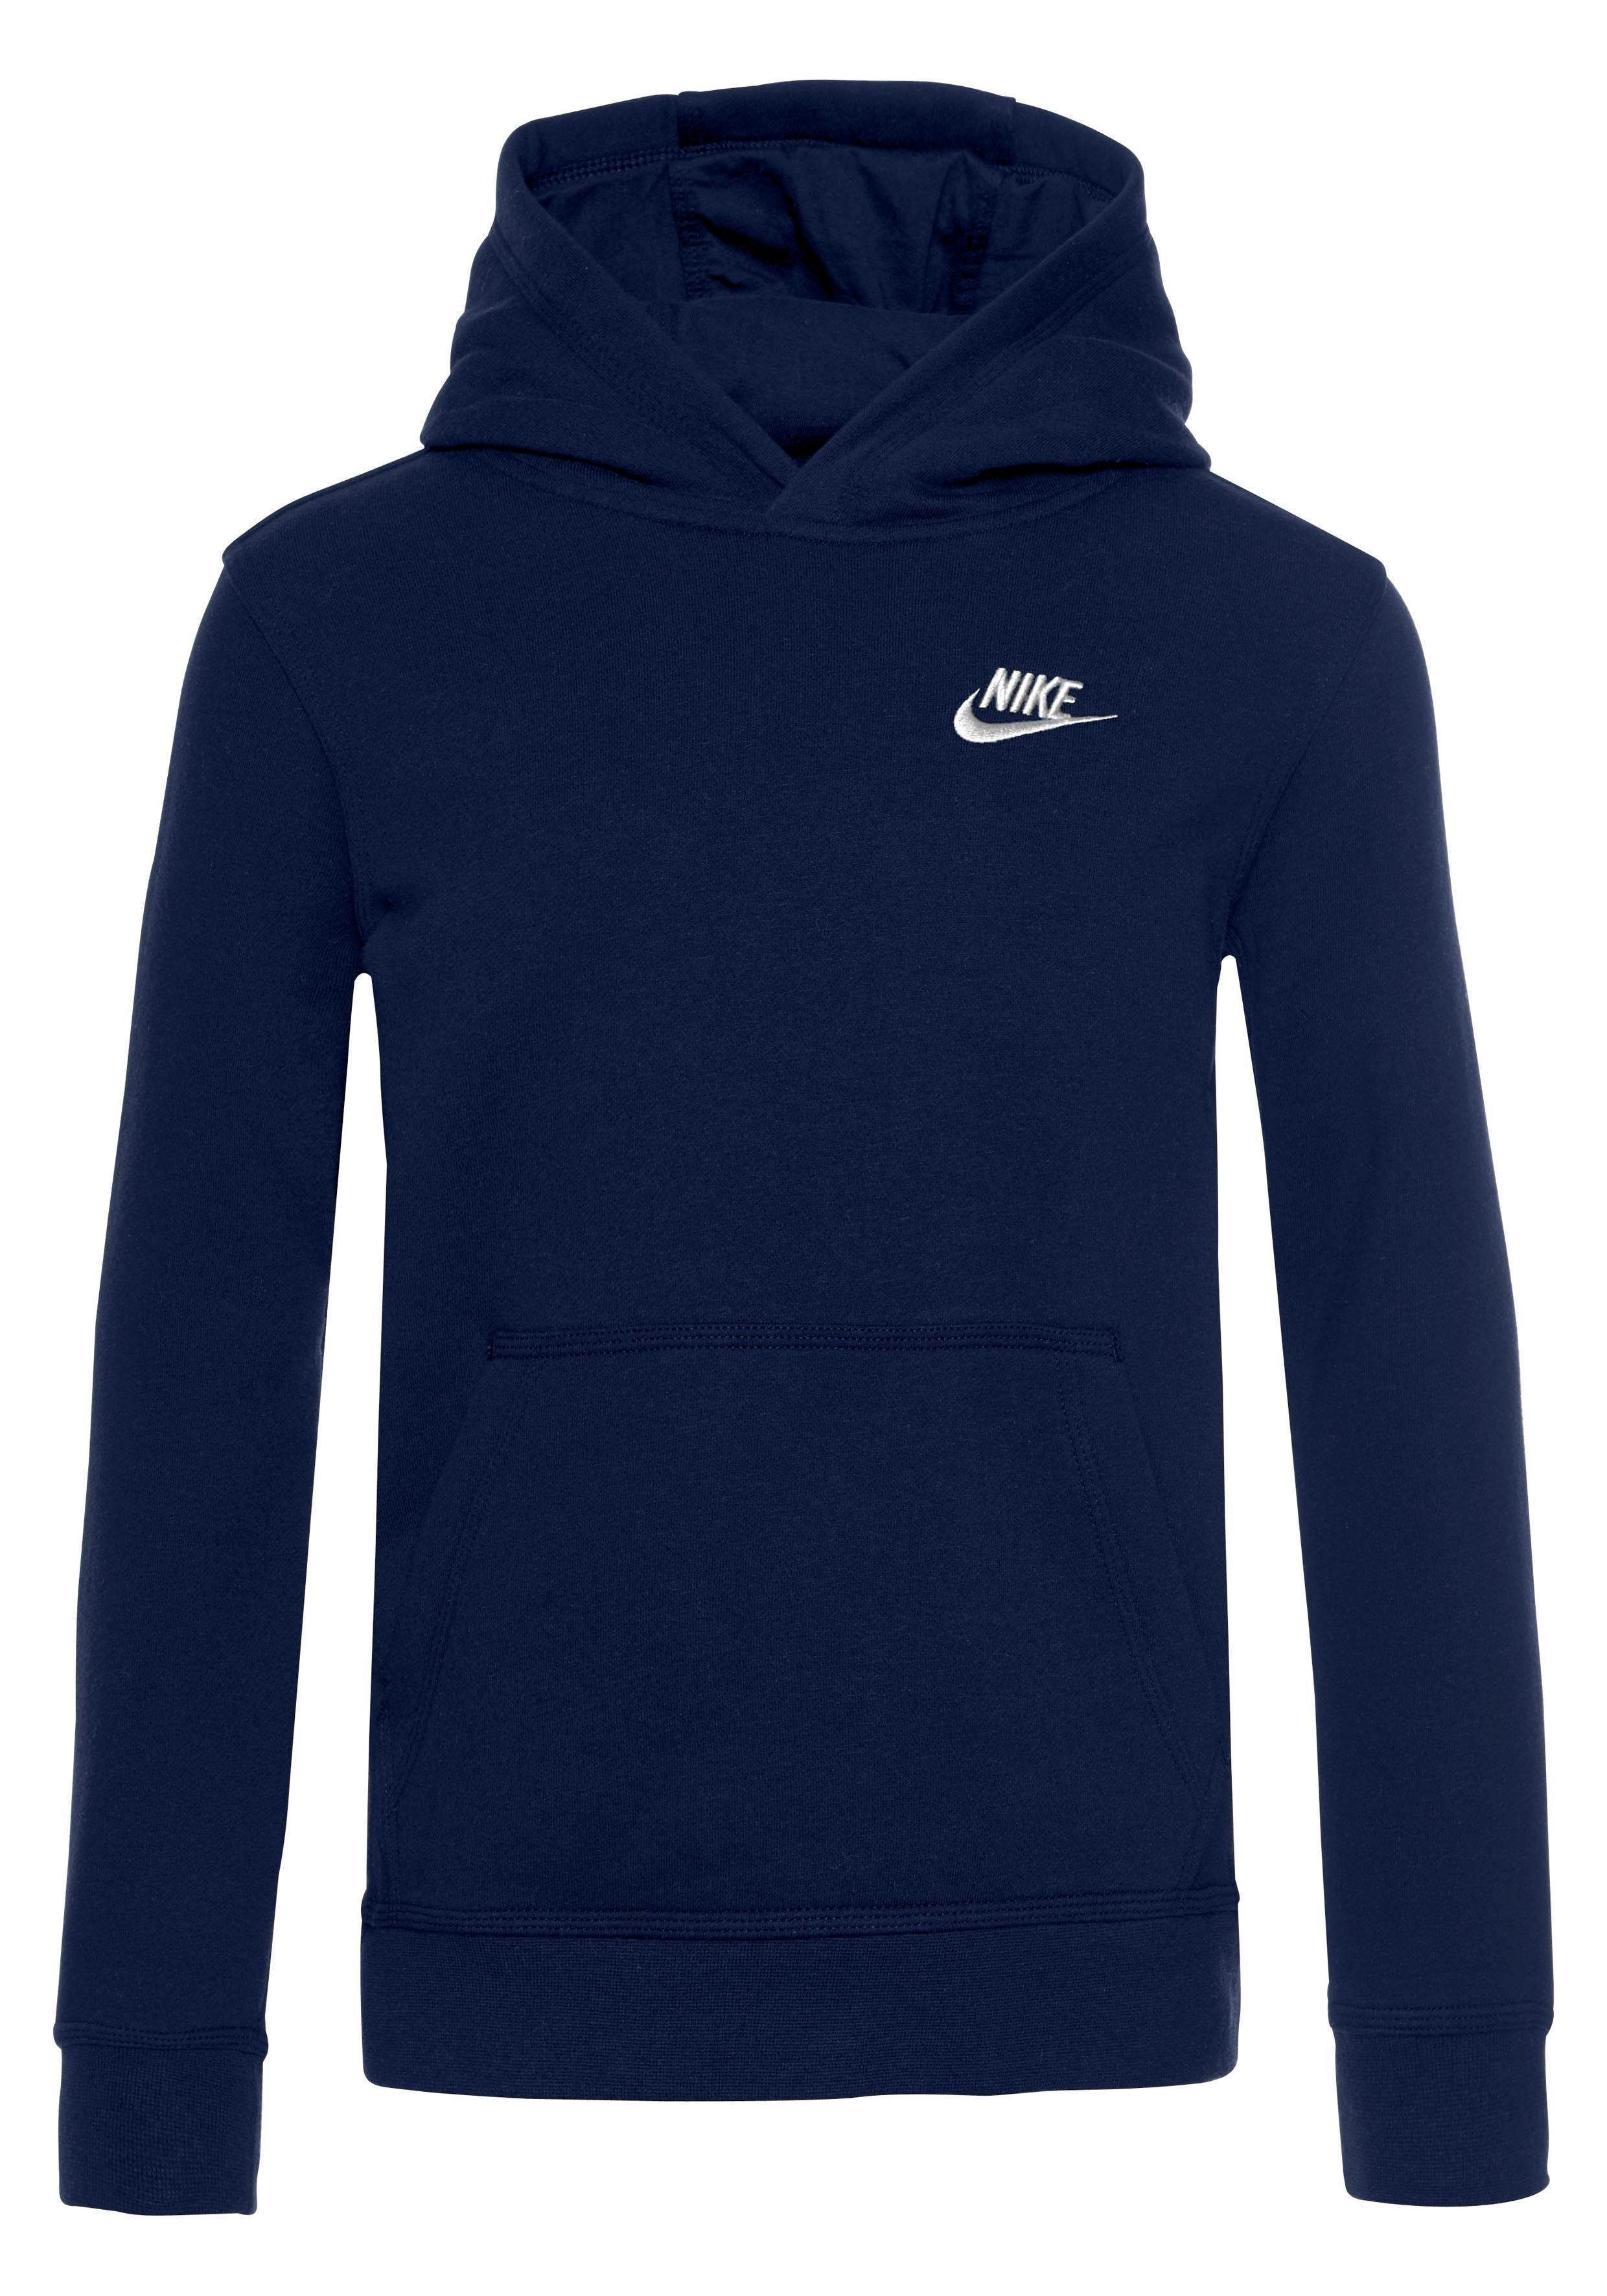 Nike Sportswear Kapuzensweatshirt Kids' Pullover dunkelblau Big Hoodie Club